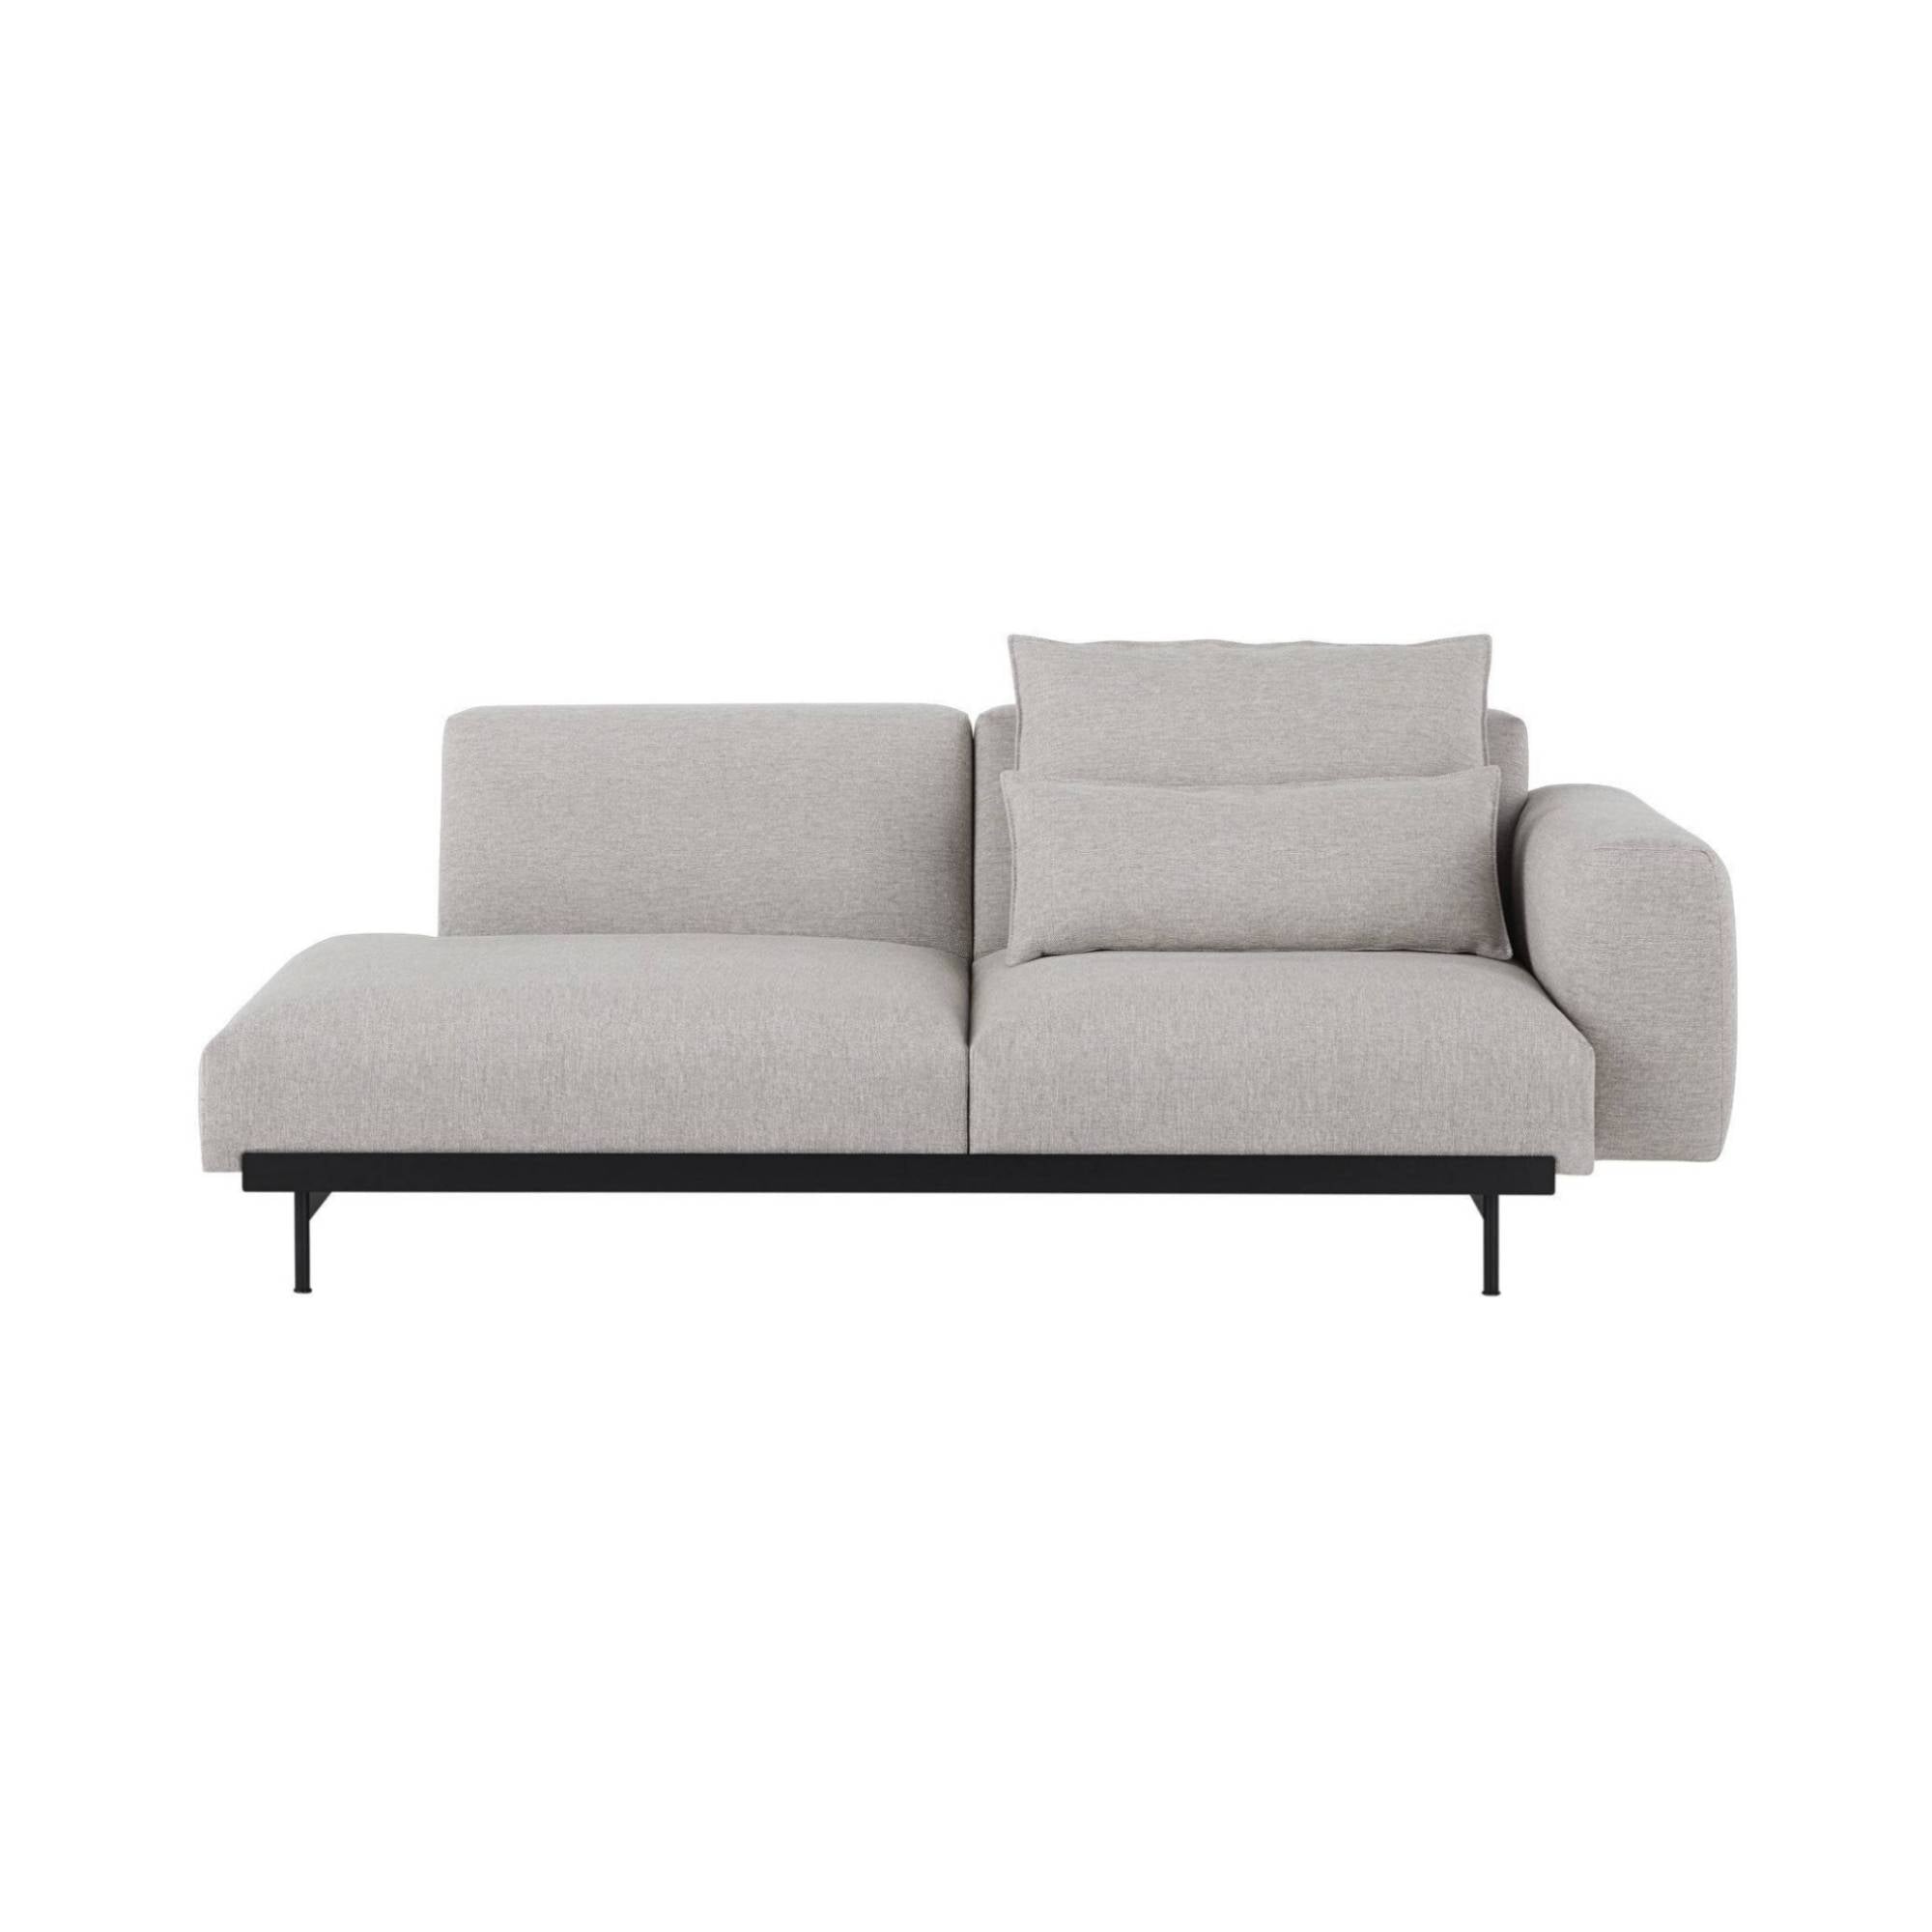 In Situ Modular Sofa: 2 Seater + Configuration 2